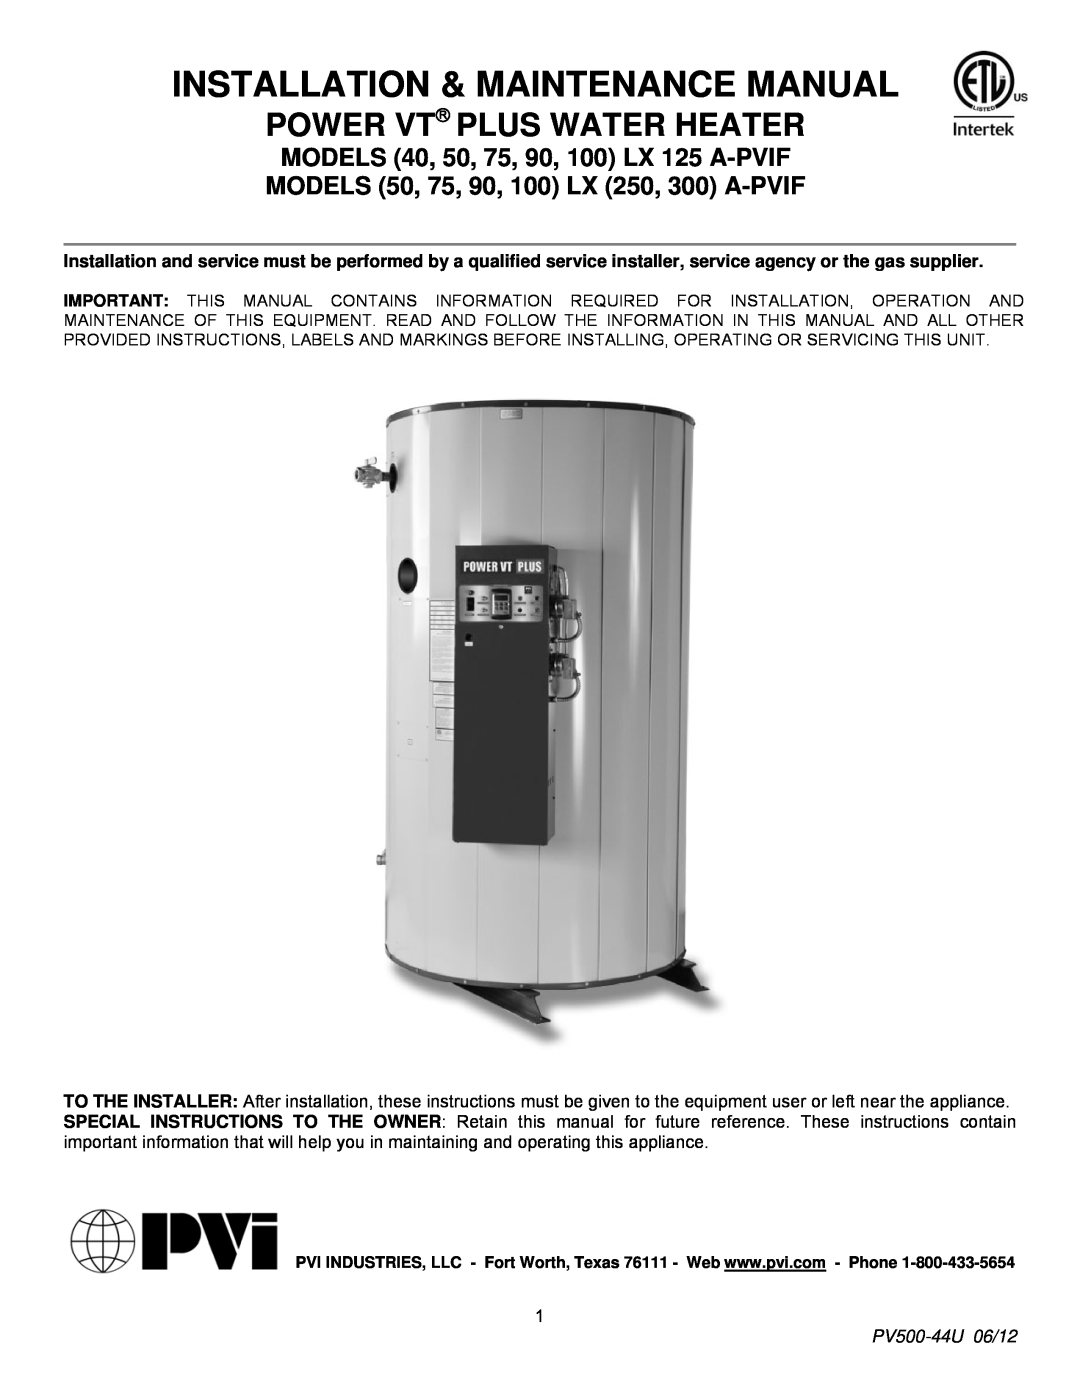 PVI Industries manual Installation & Maintenance Manual, Power Vt Plus Water Heater, PV500-44U06/12 